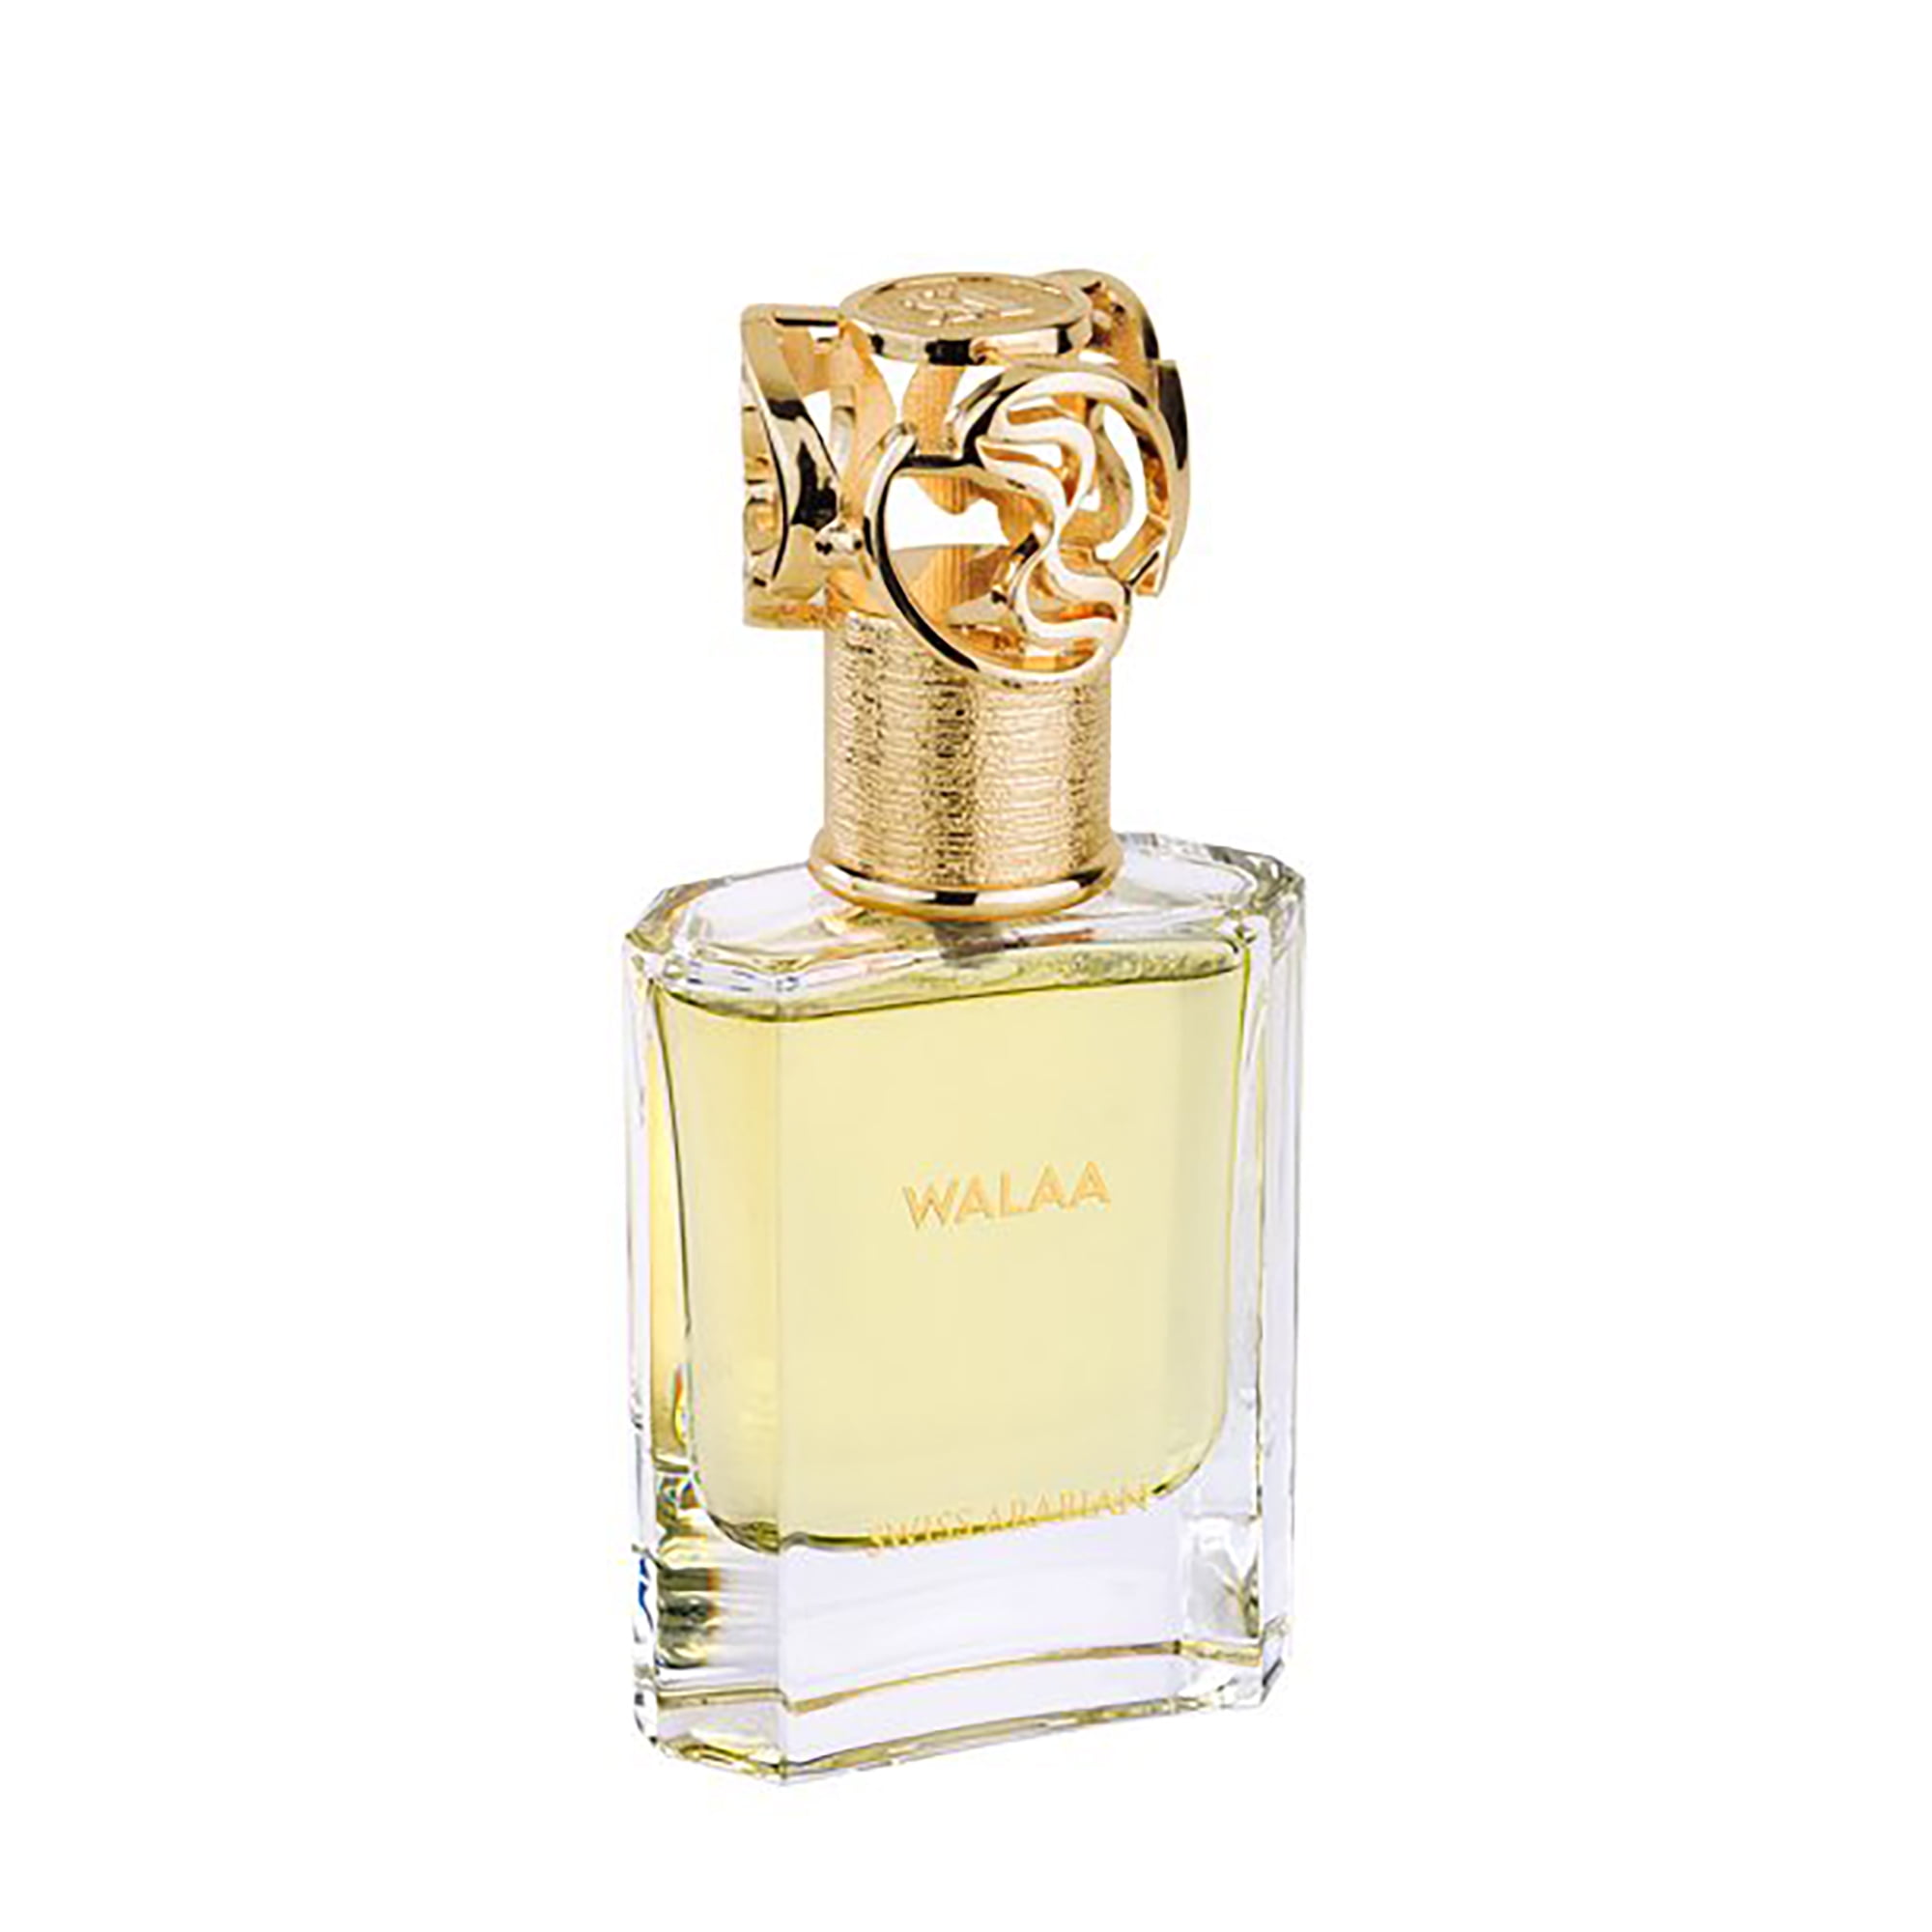 Layali Rouge Arabian Perfume Oil Review, by Jazlyn, Dec, 2023